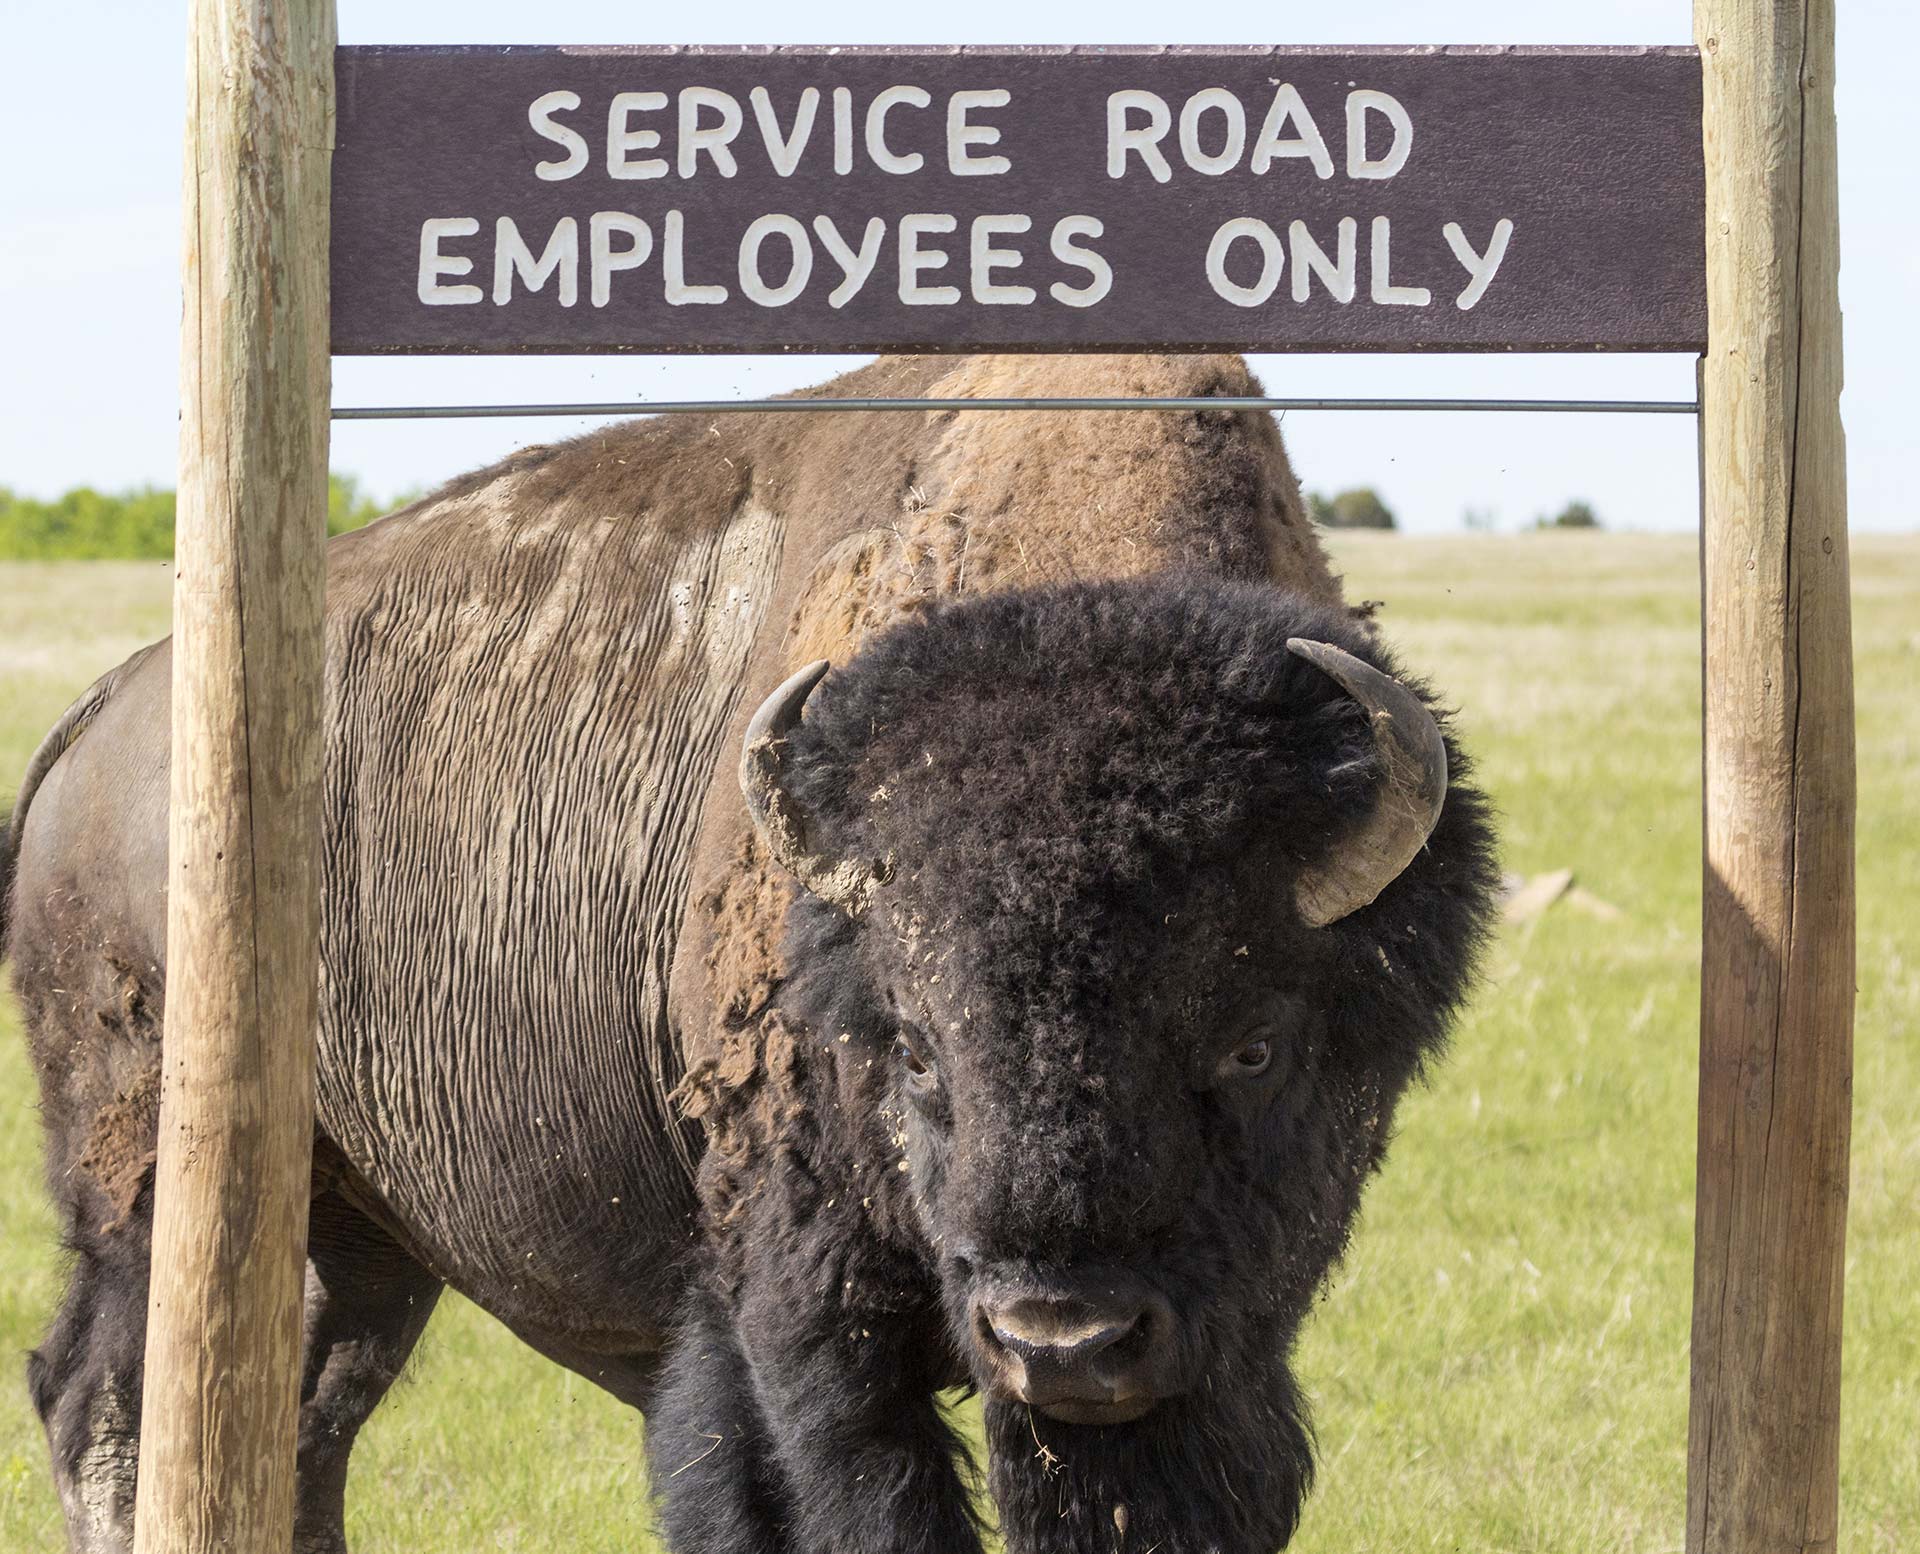 Buffalo next to a "service road" sign